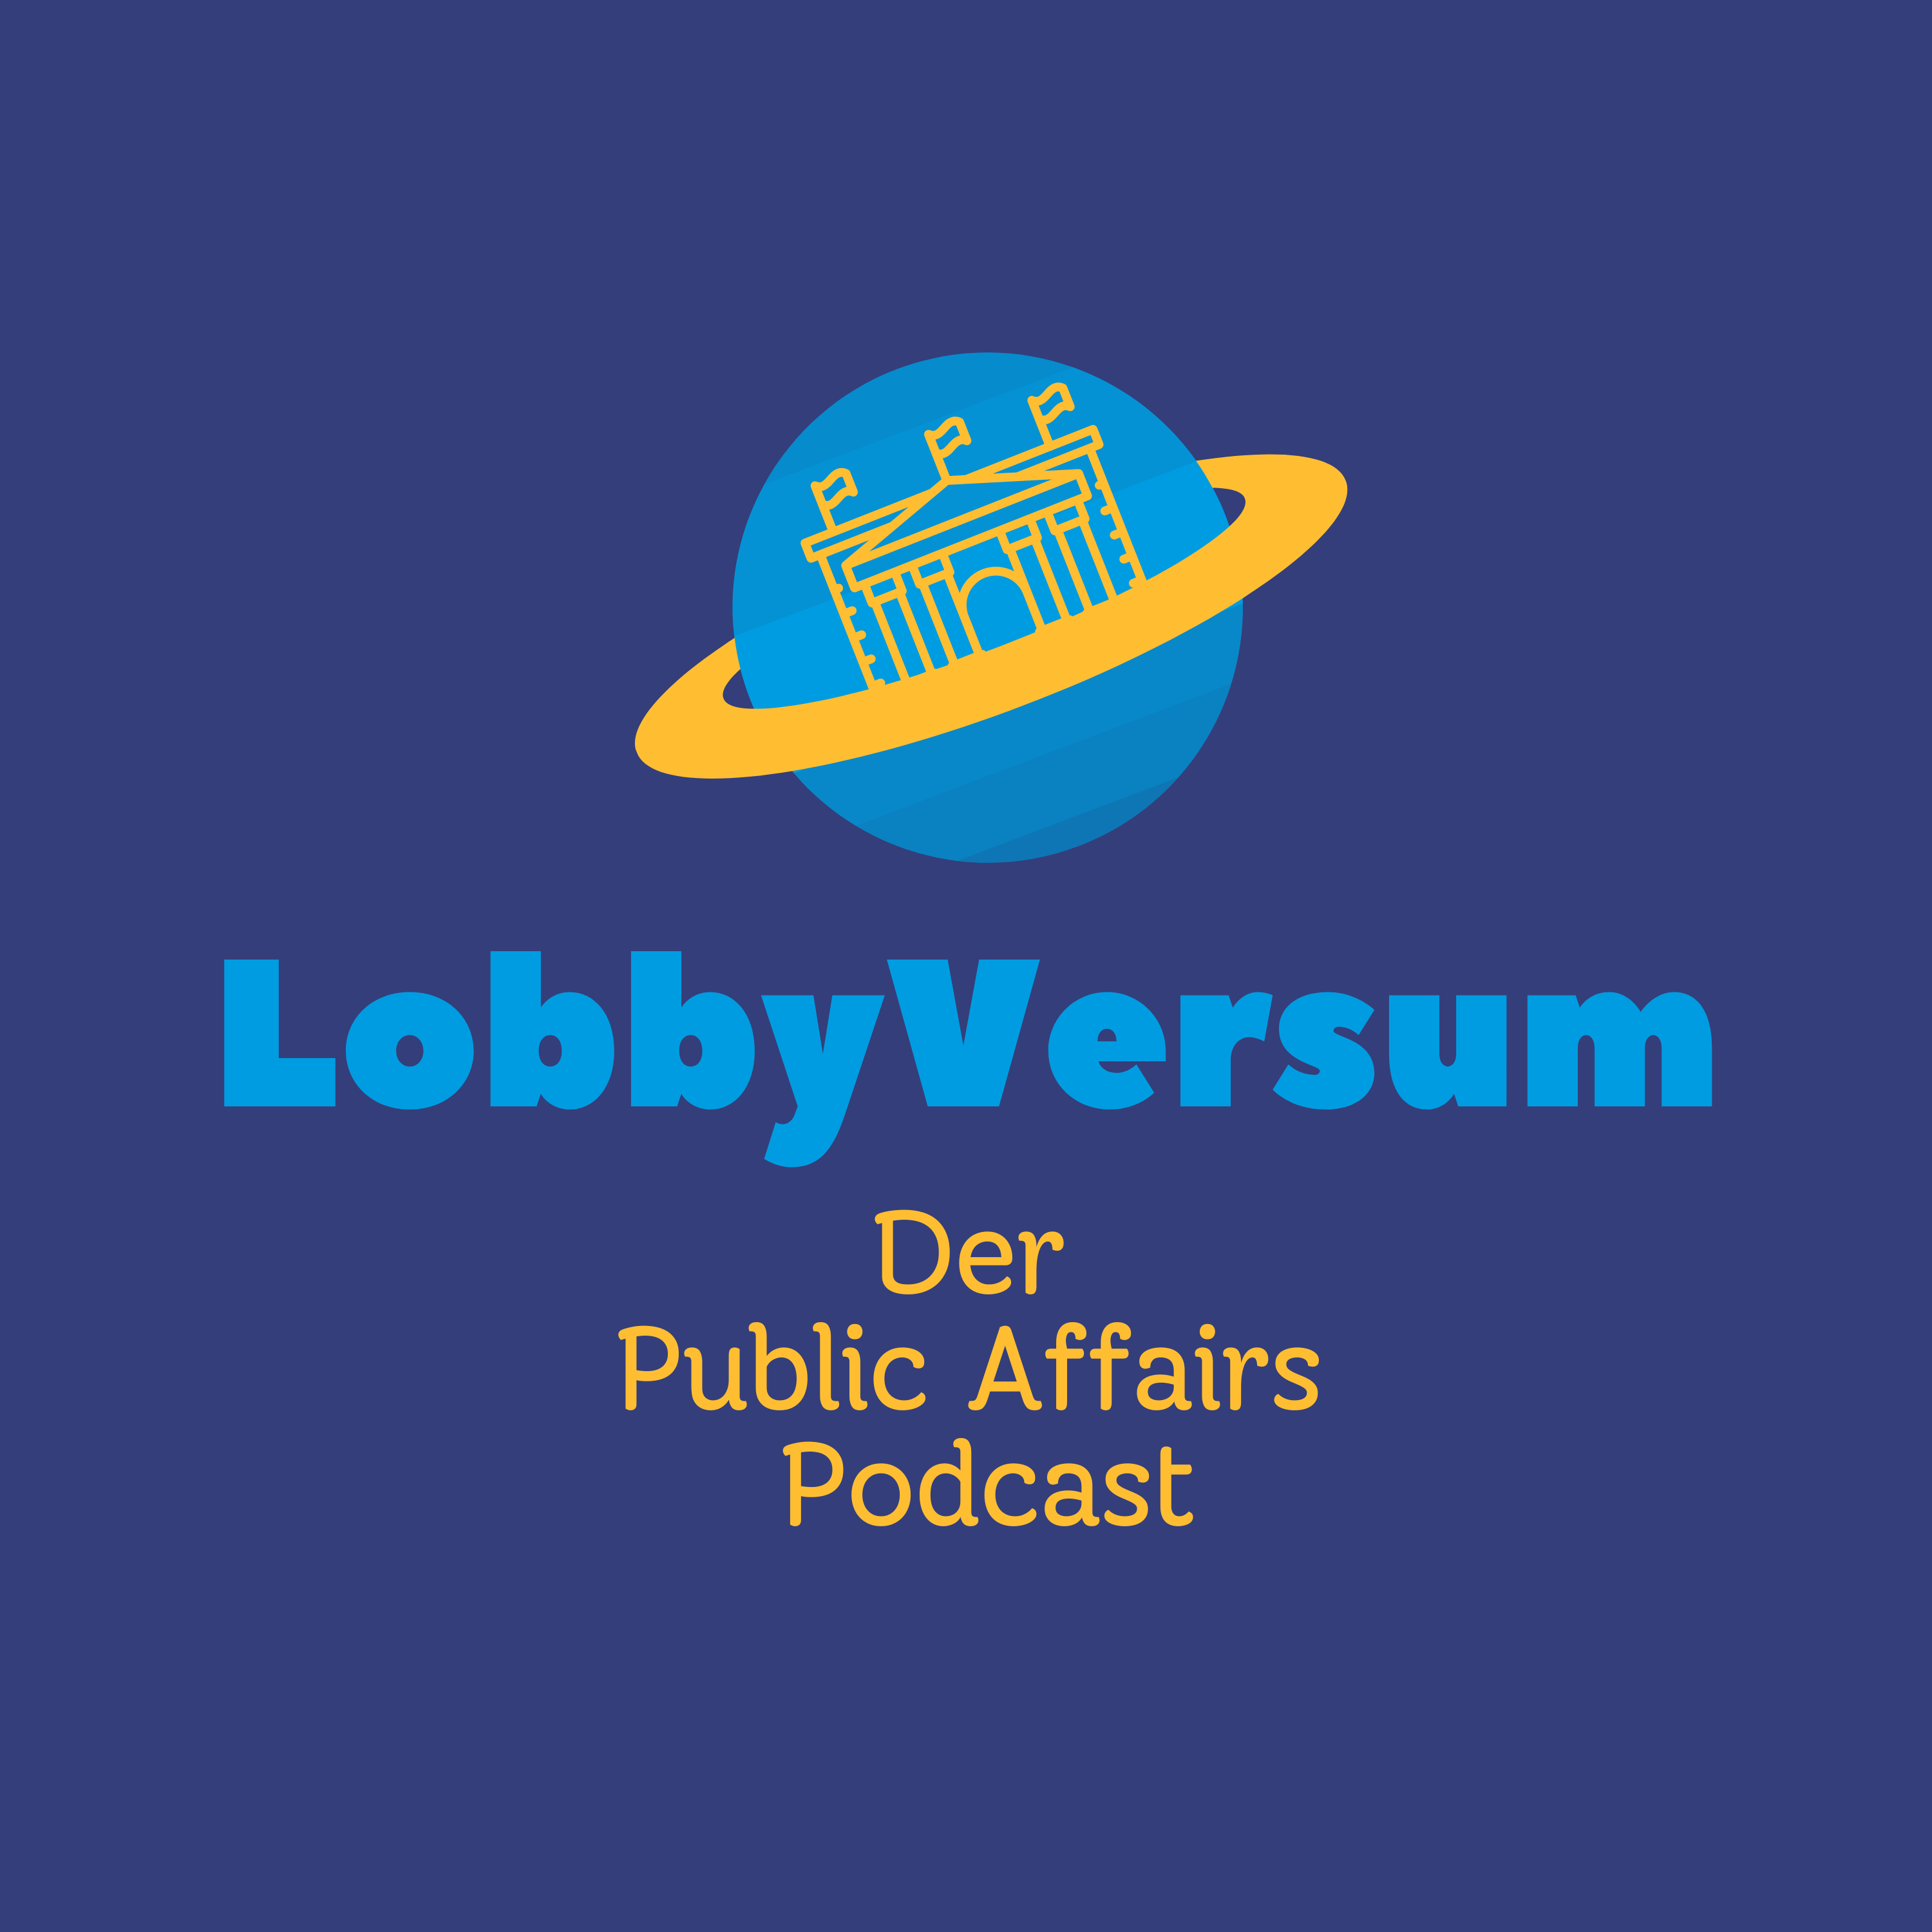 Das LobbyVersum – Der Public Affairs-Podcast